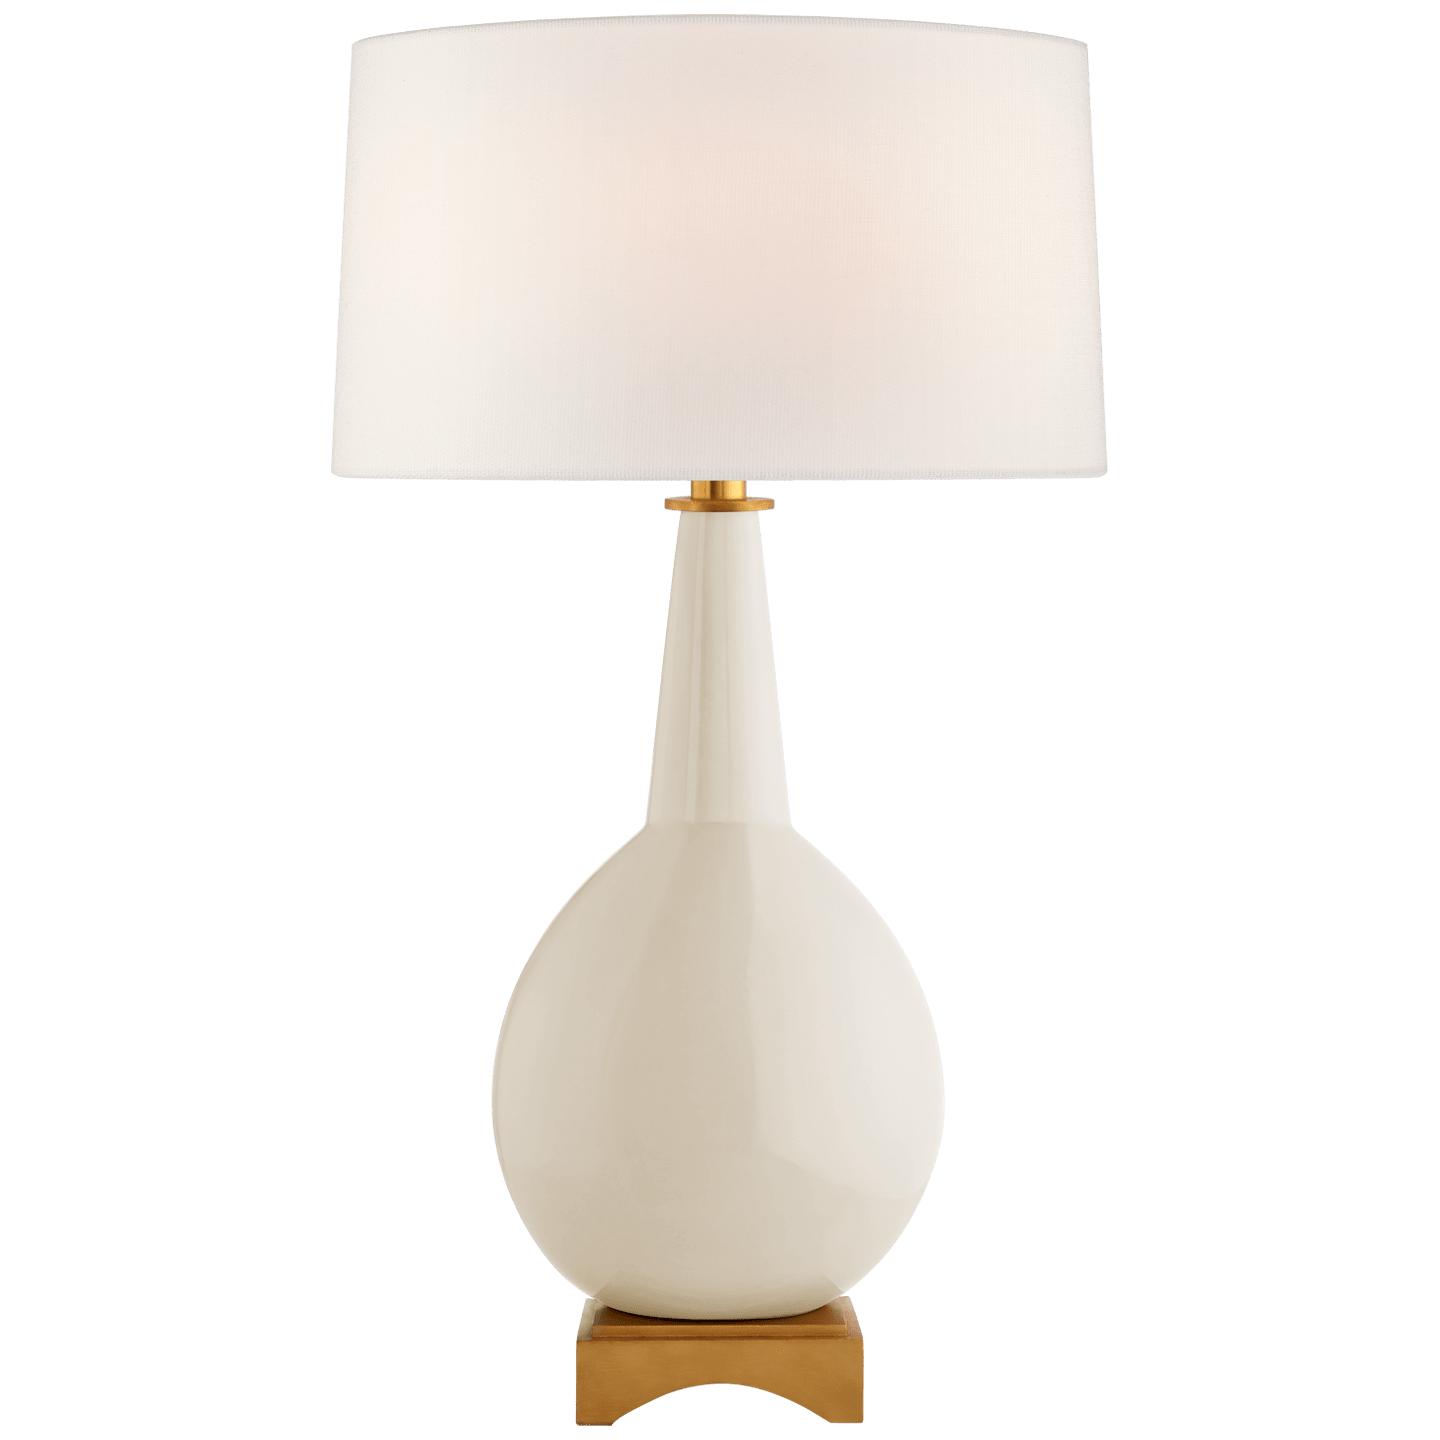 Купить Настольная лампа Antoine Large Table Lamp в интернет-магазине roooms.ru